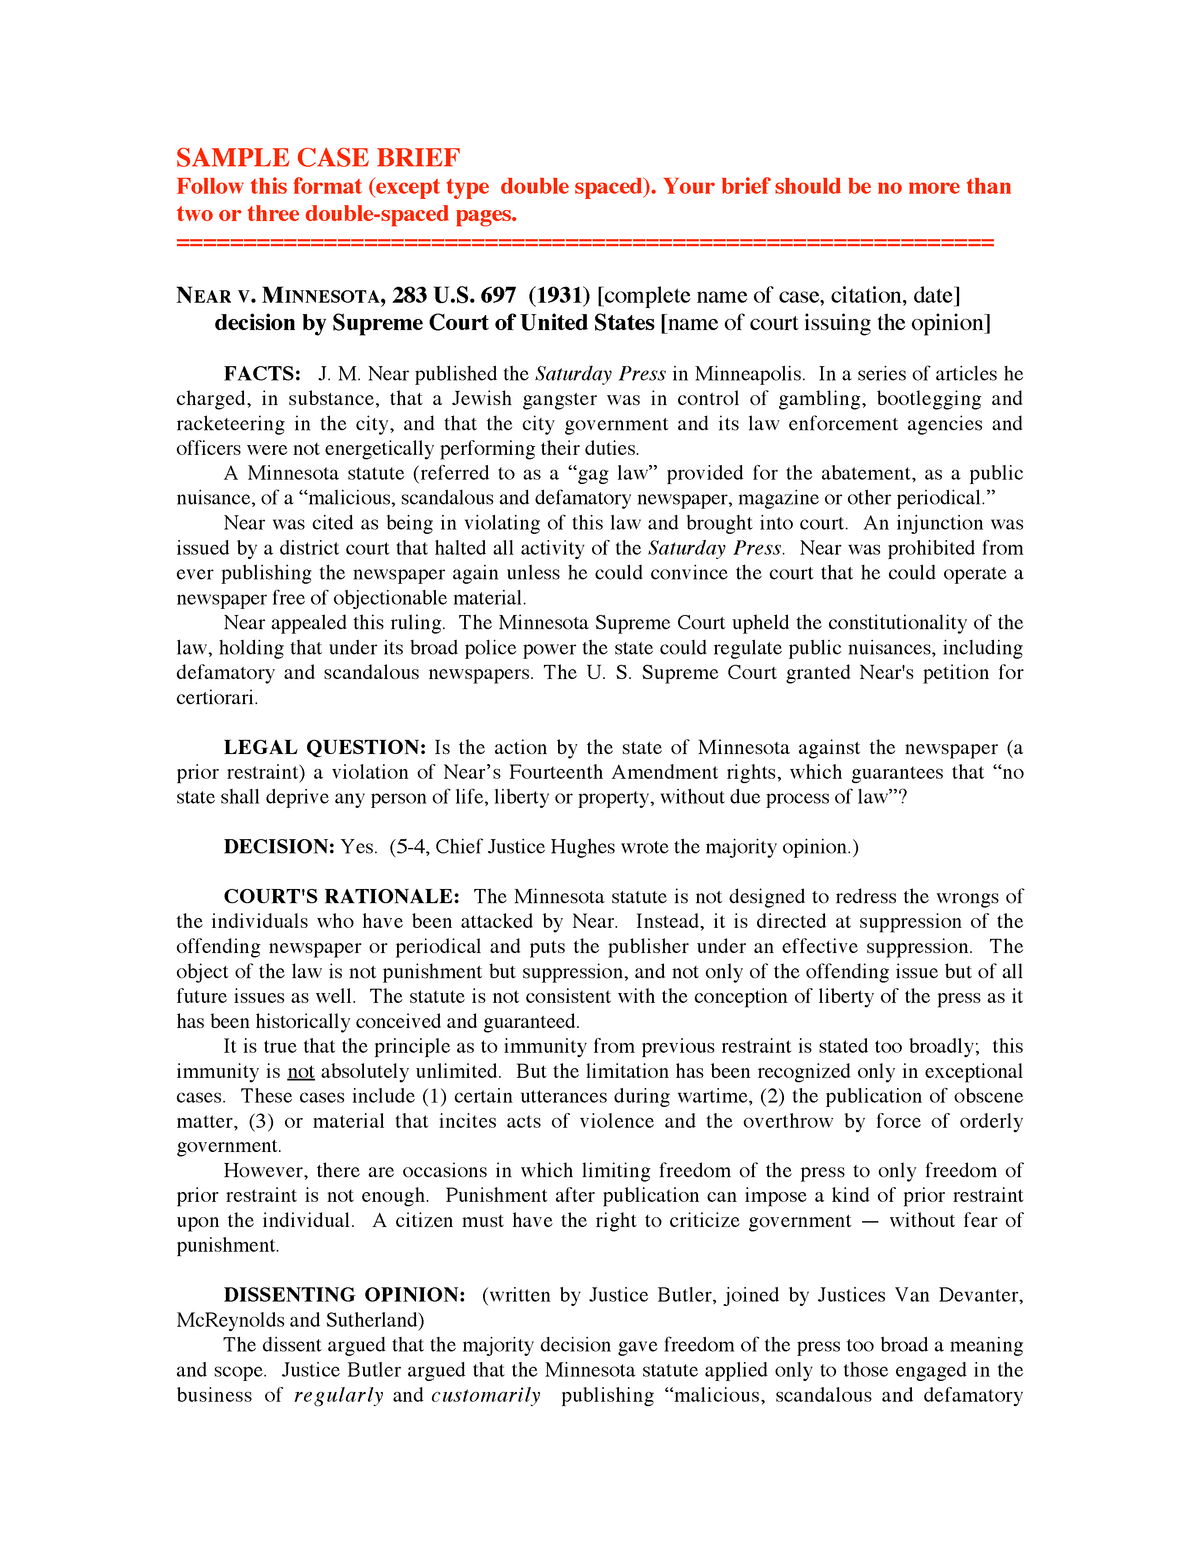 Sample Case Brief PDF Format - BUS 17 - Business Law I - RCGC